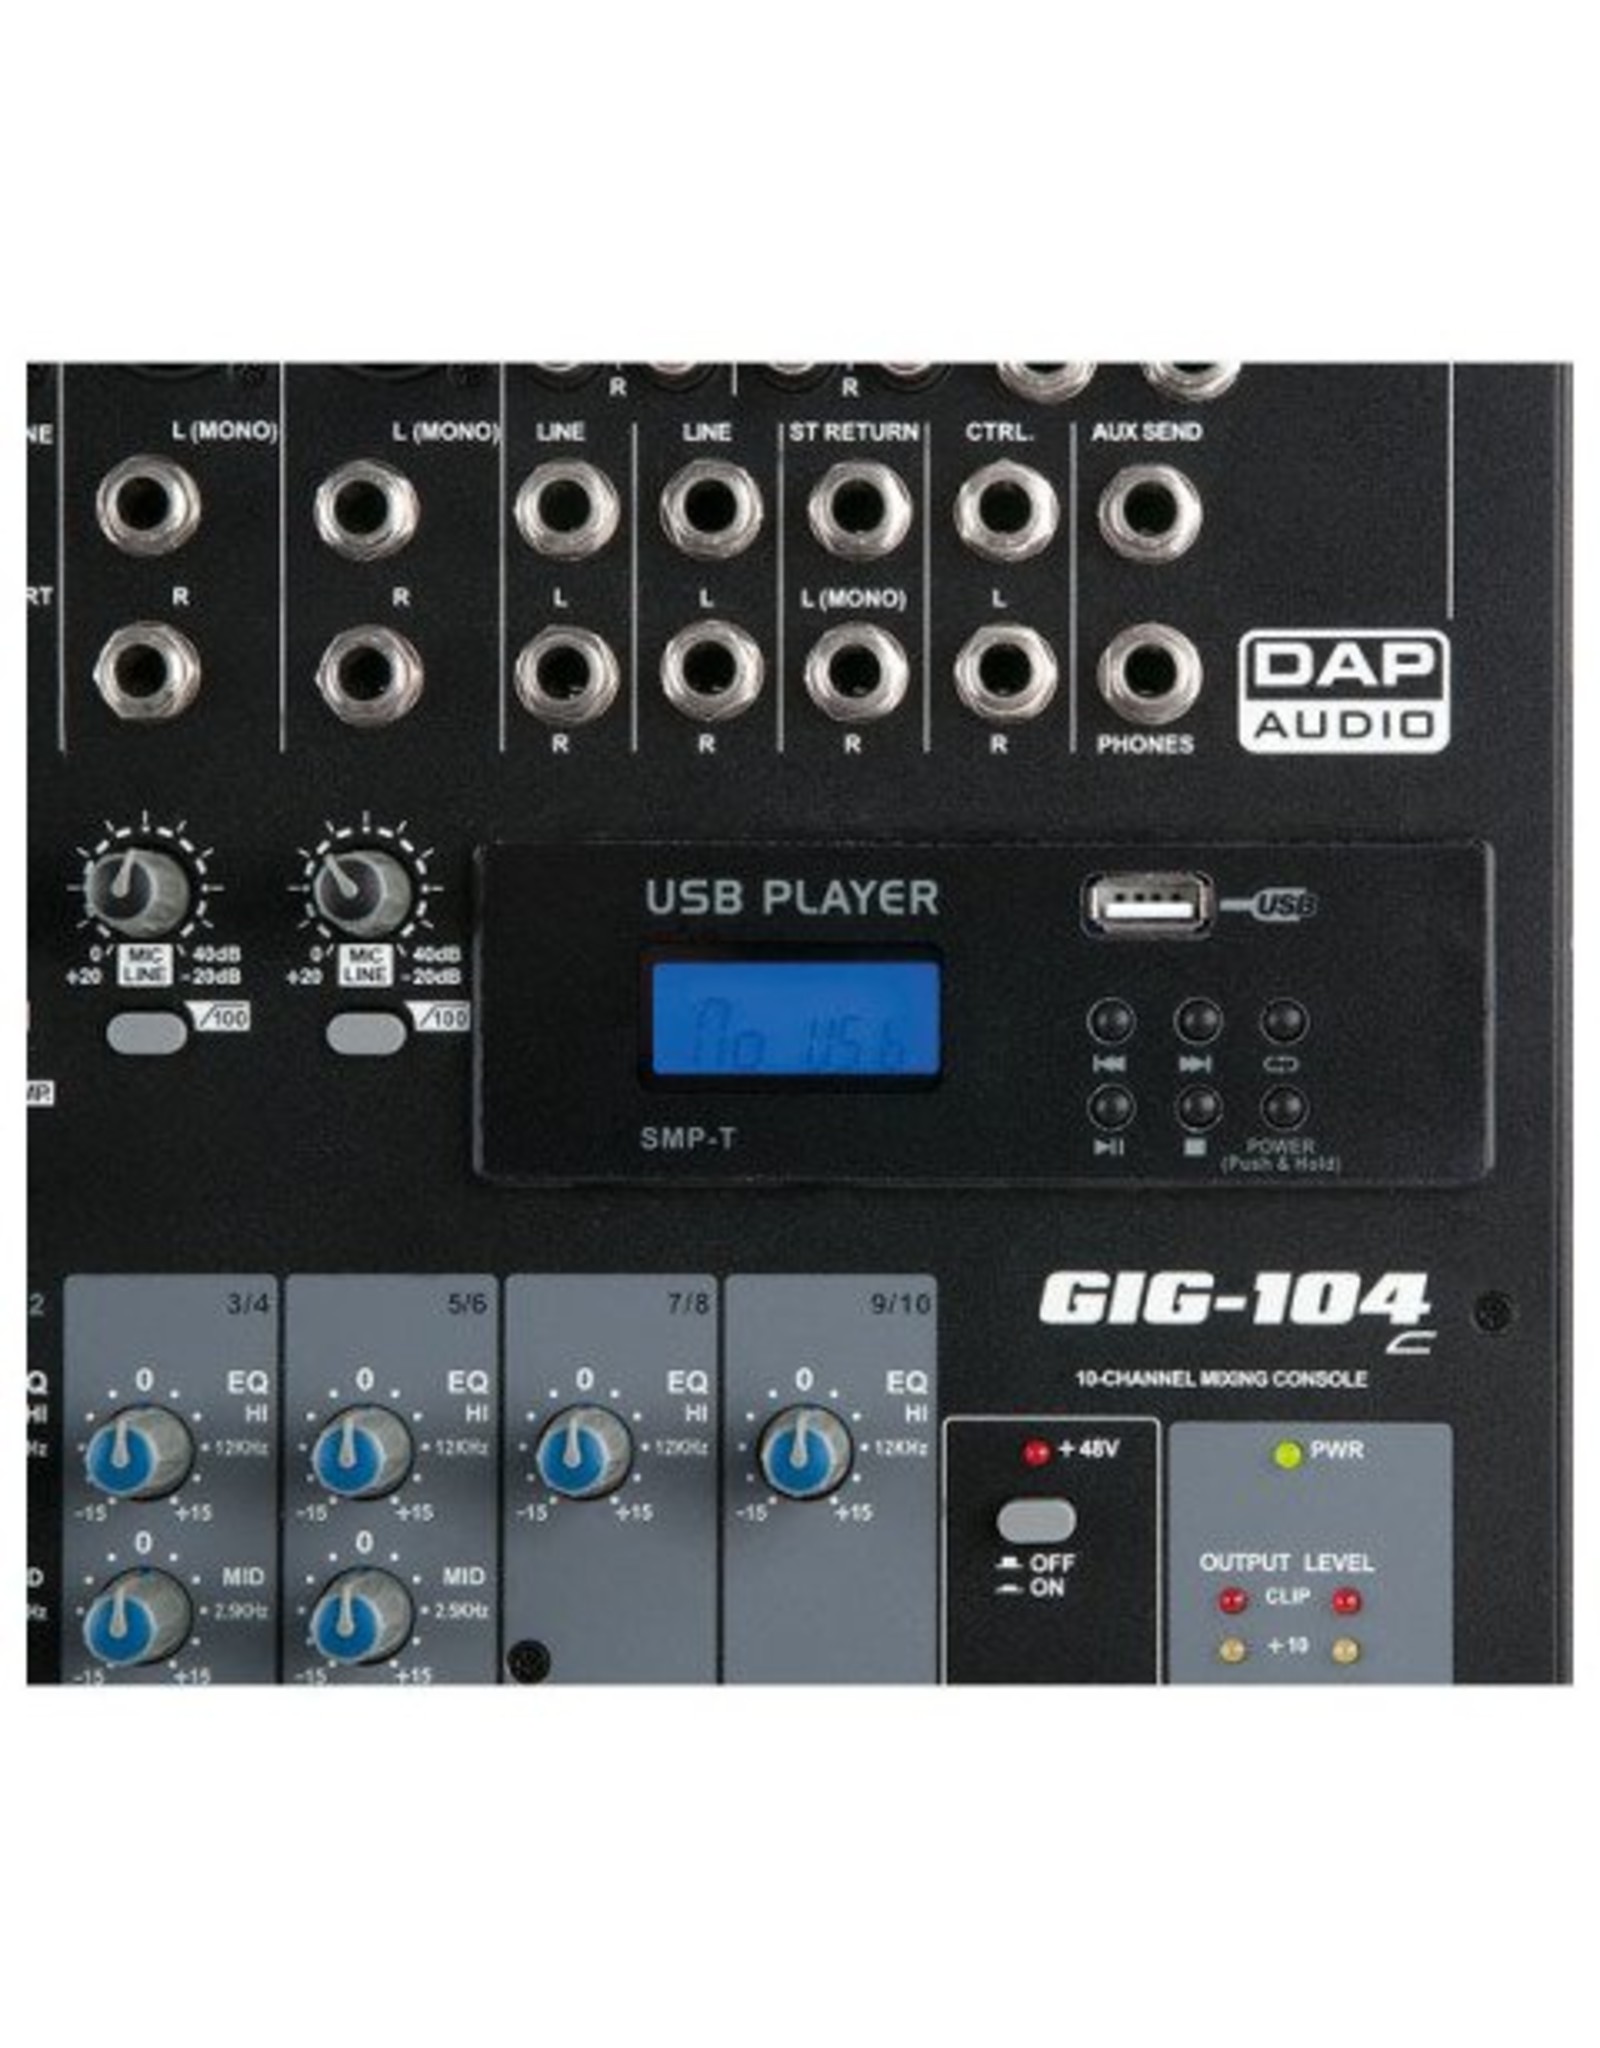 DAP audio pro DAP audio MP3 USB play module for GIG D2290